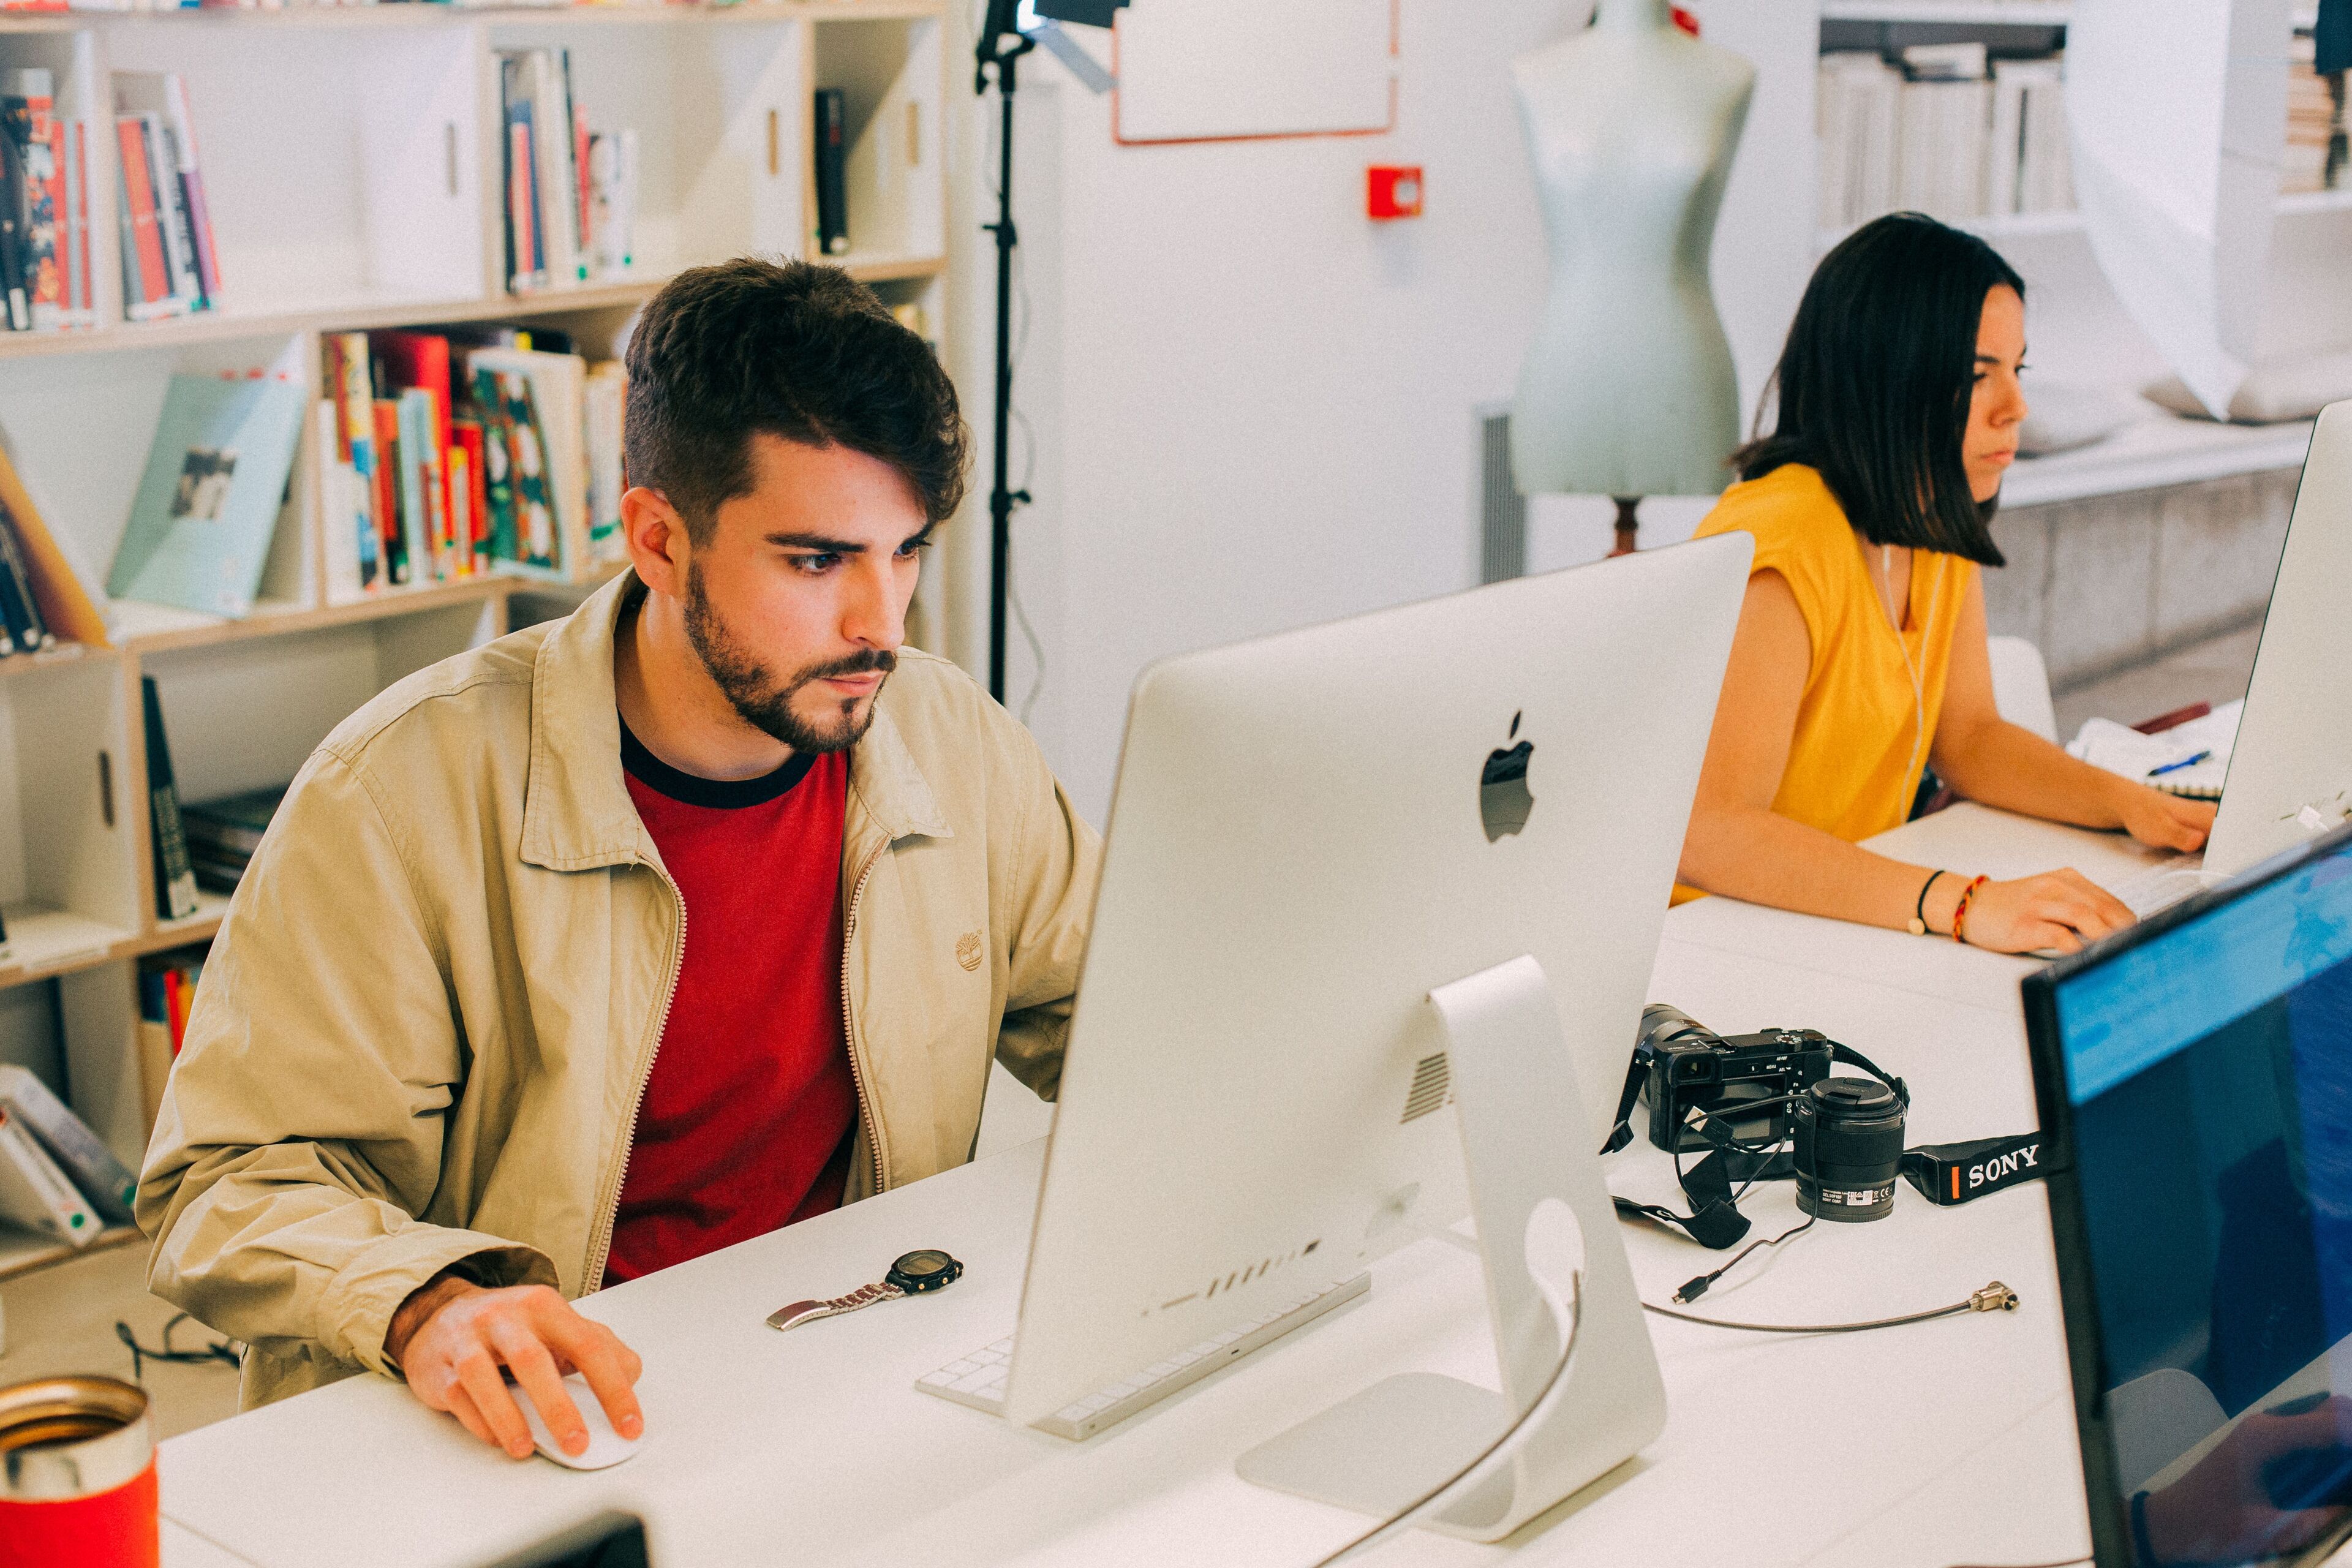 Dos individus concentrats treballen en ordinadors Apple en un entorn d'oficina modern.